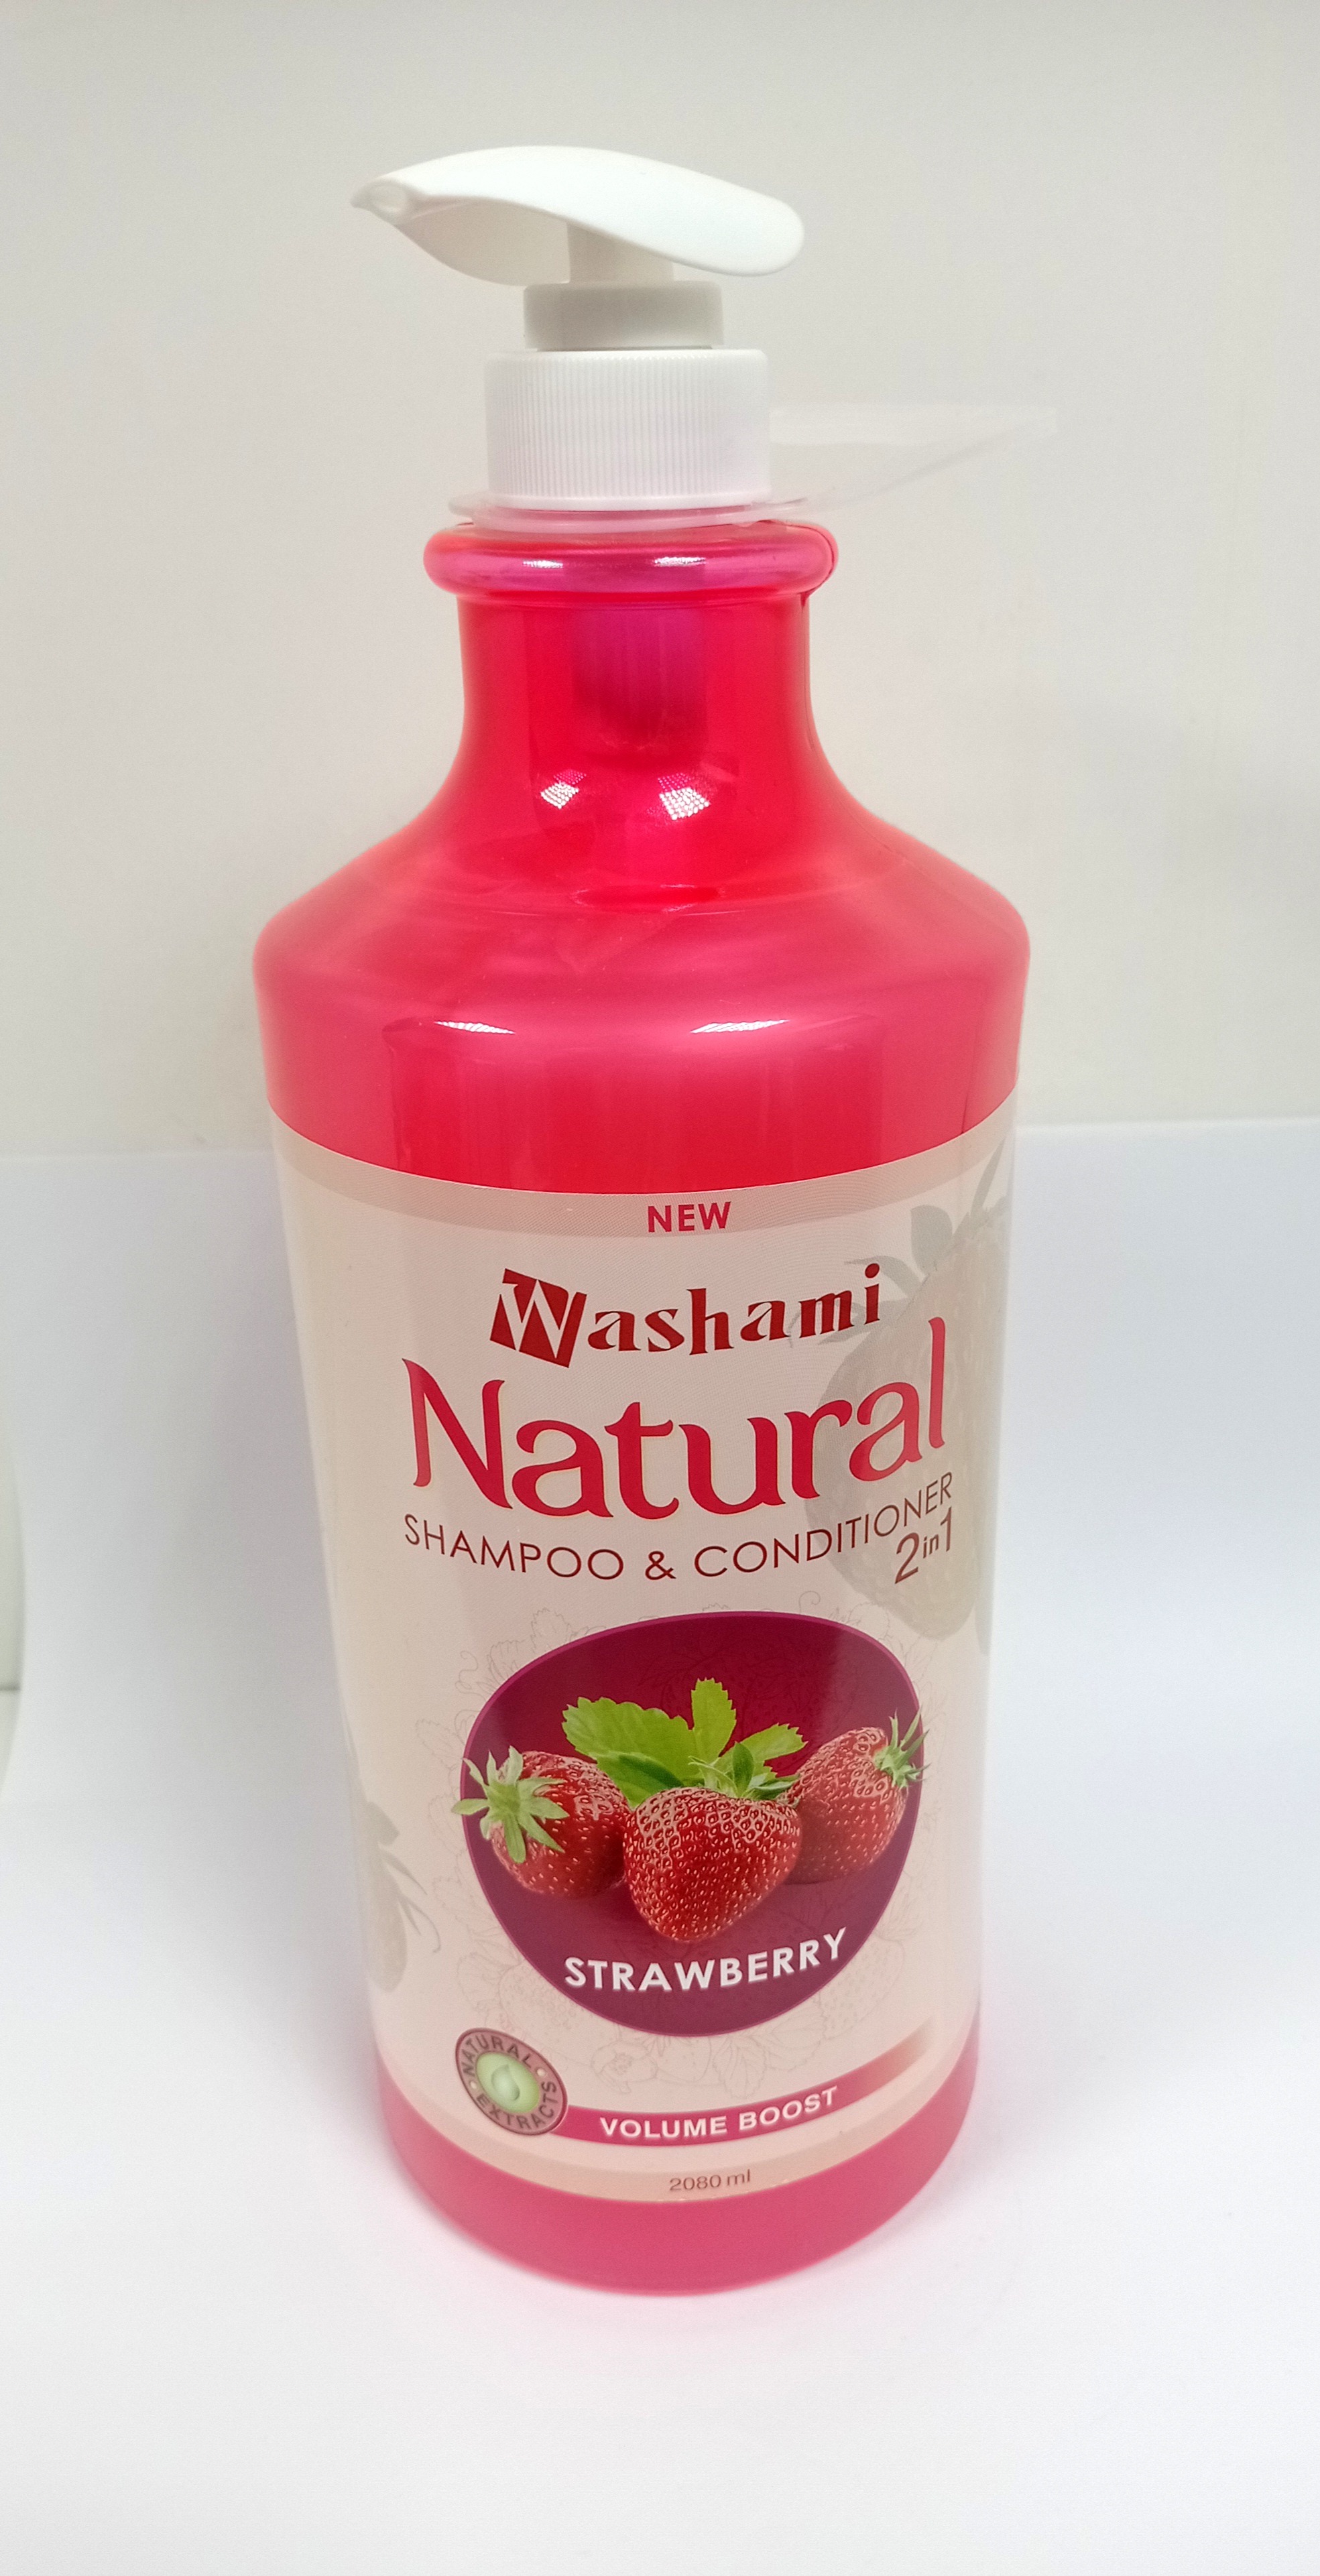 Washami Natural Shampoo and Conditioner Strawberry 2 in 1 (2080ml)